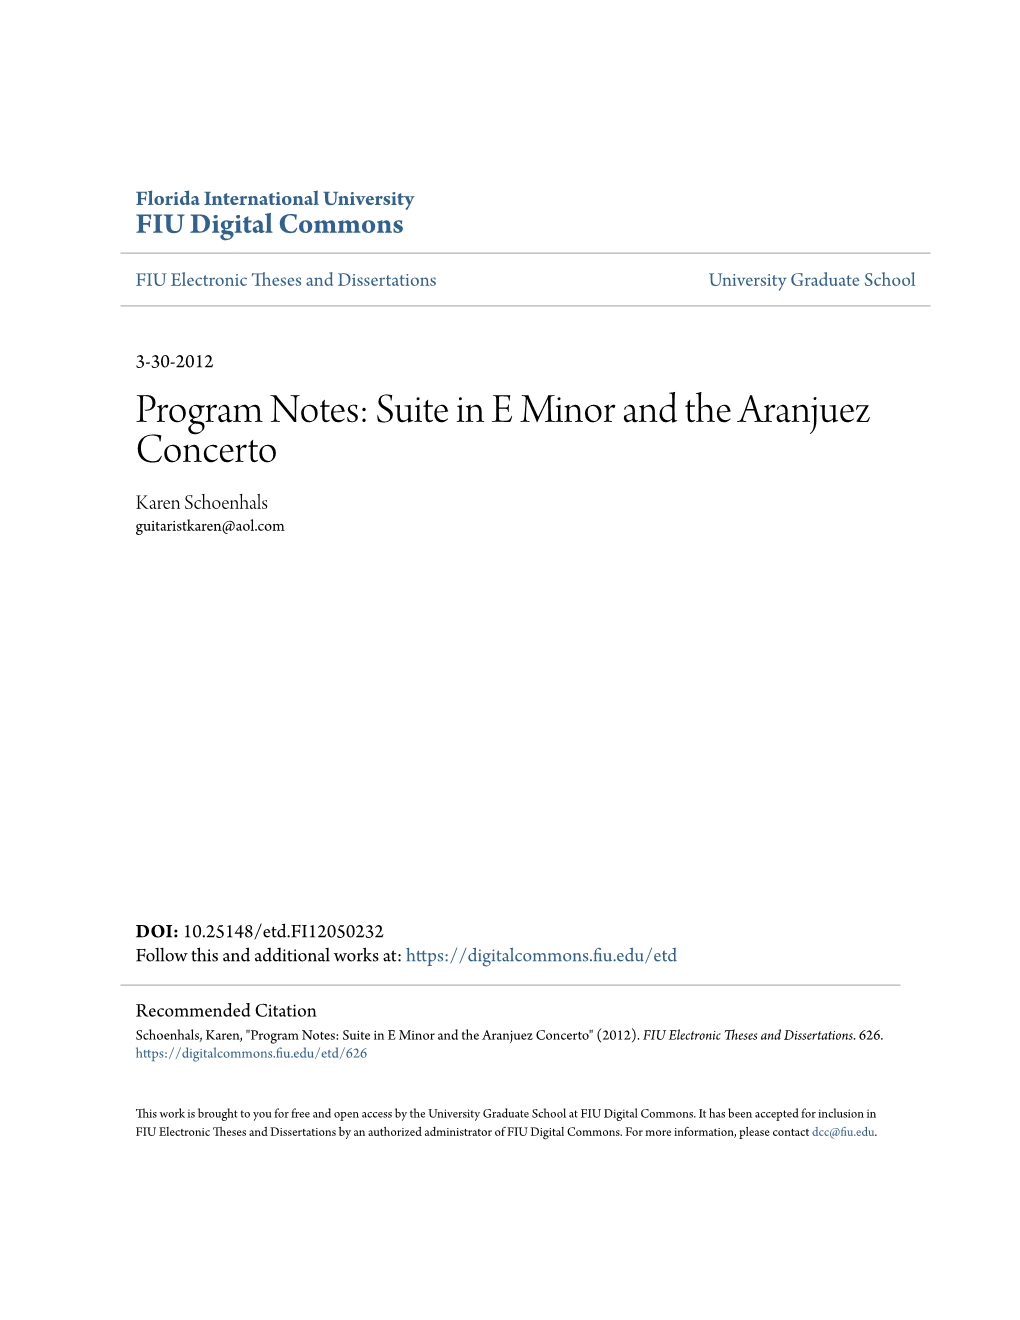 Program Notes: Suite in E Minor and the Aranjuez Concerto Karen Schoenhals Guitaristkaren@Aol.Com